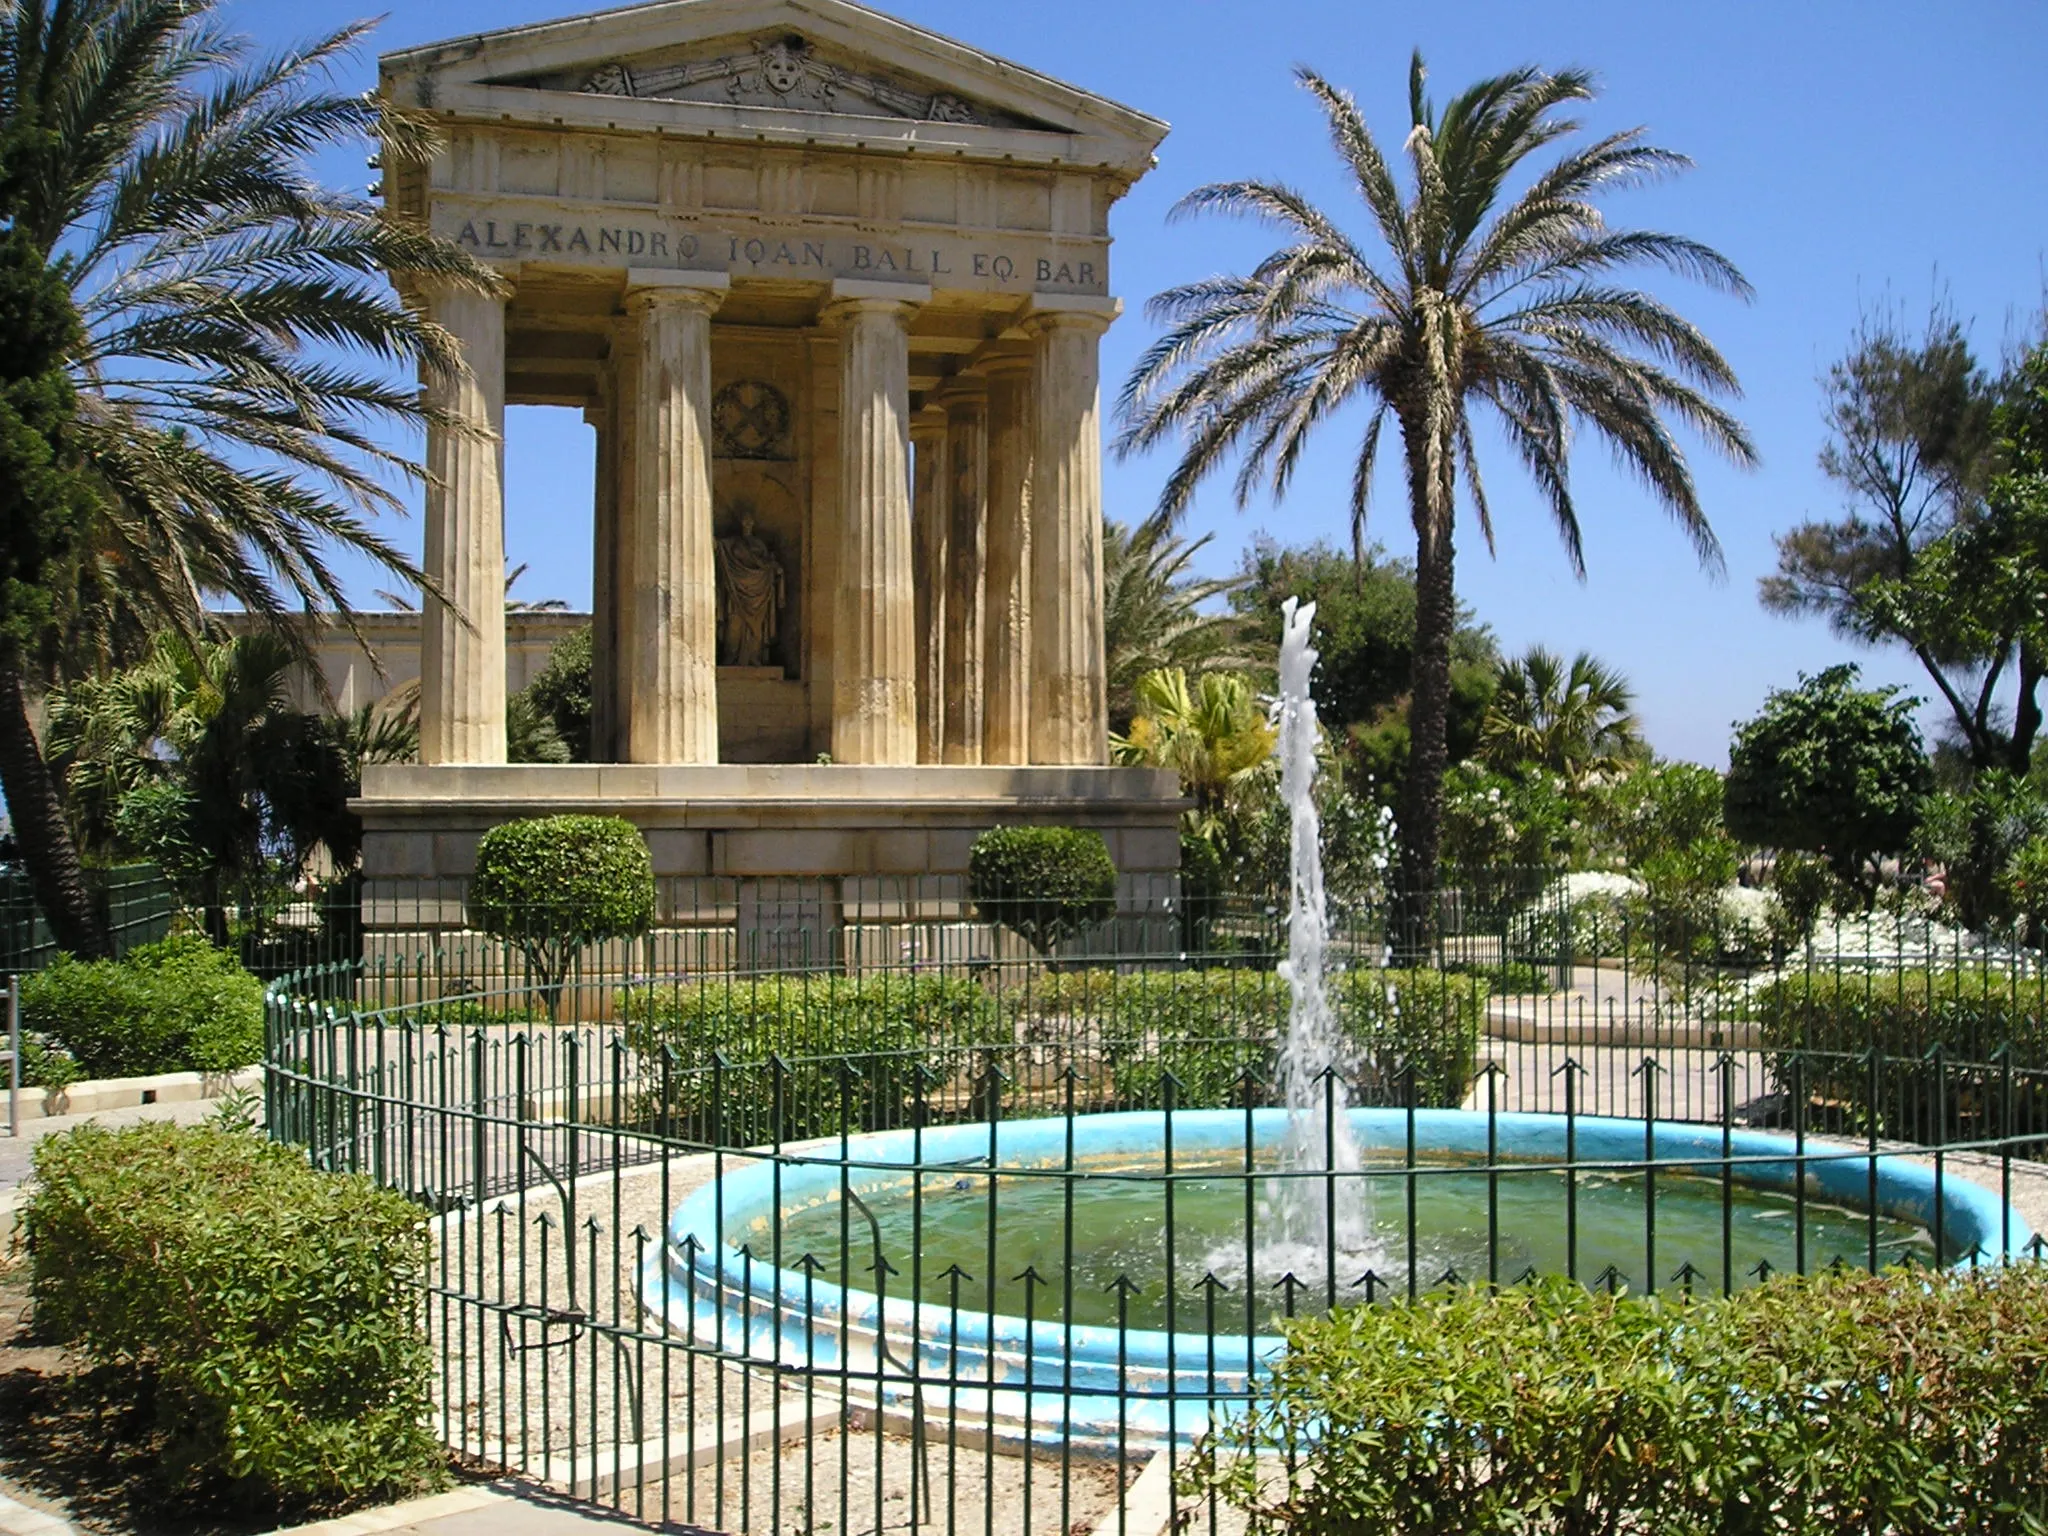 Lower Barrakka Gardens in Malta, Europe | Gardens - Rated 4.3